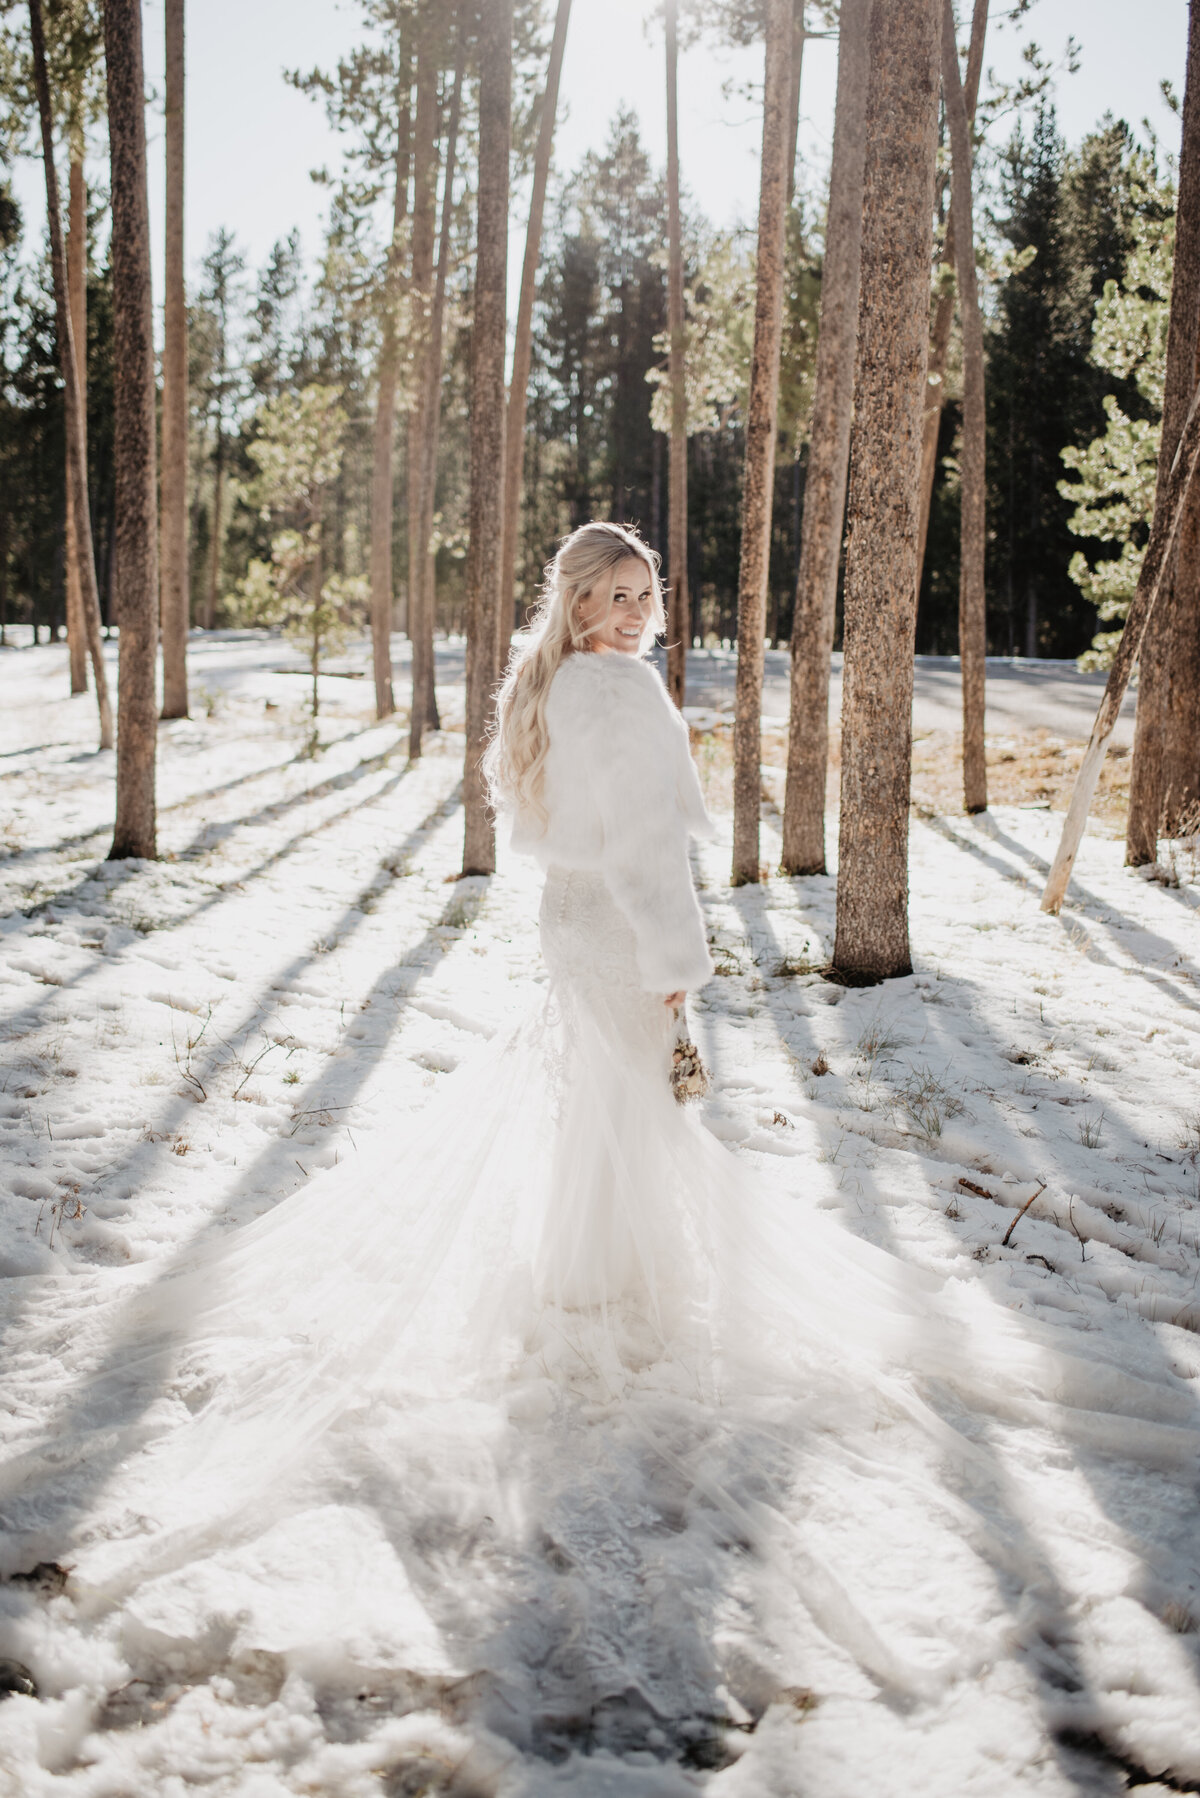 Jackson Hole Photographers capture snowy bridal portraits in Grand Tetons